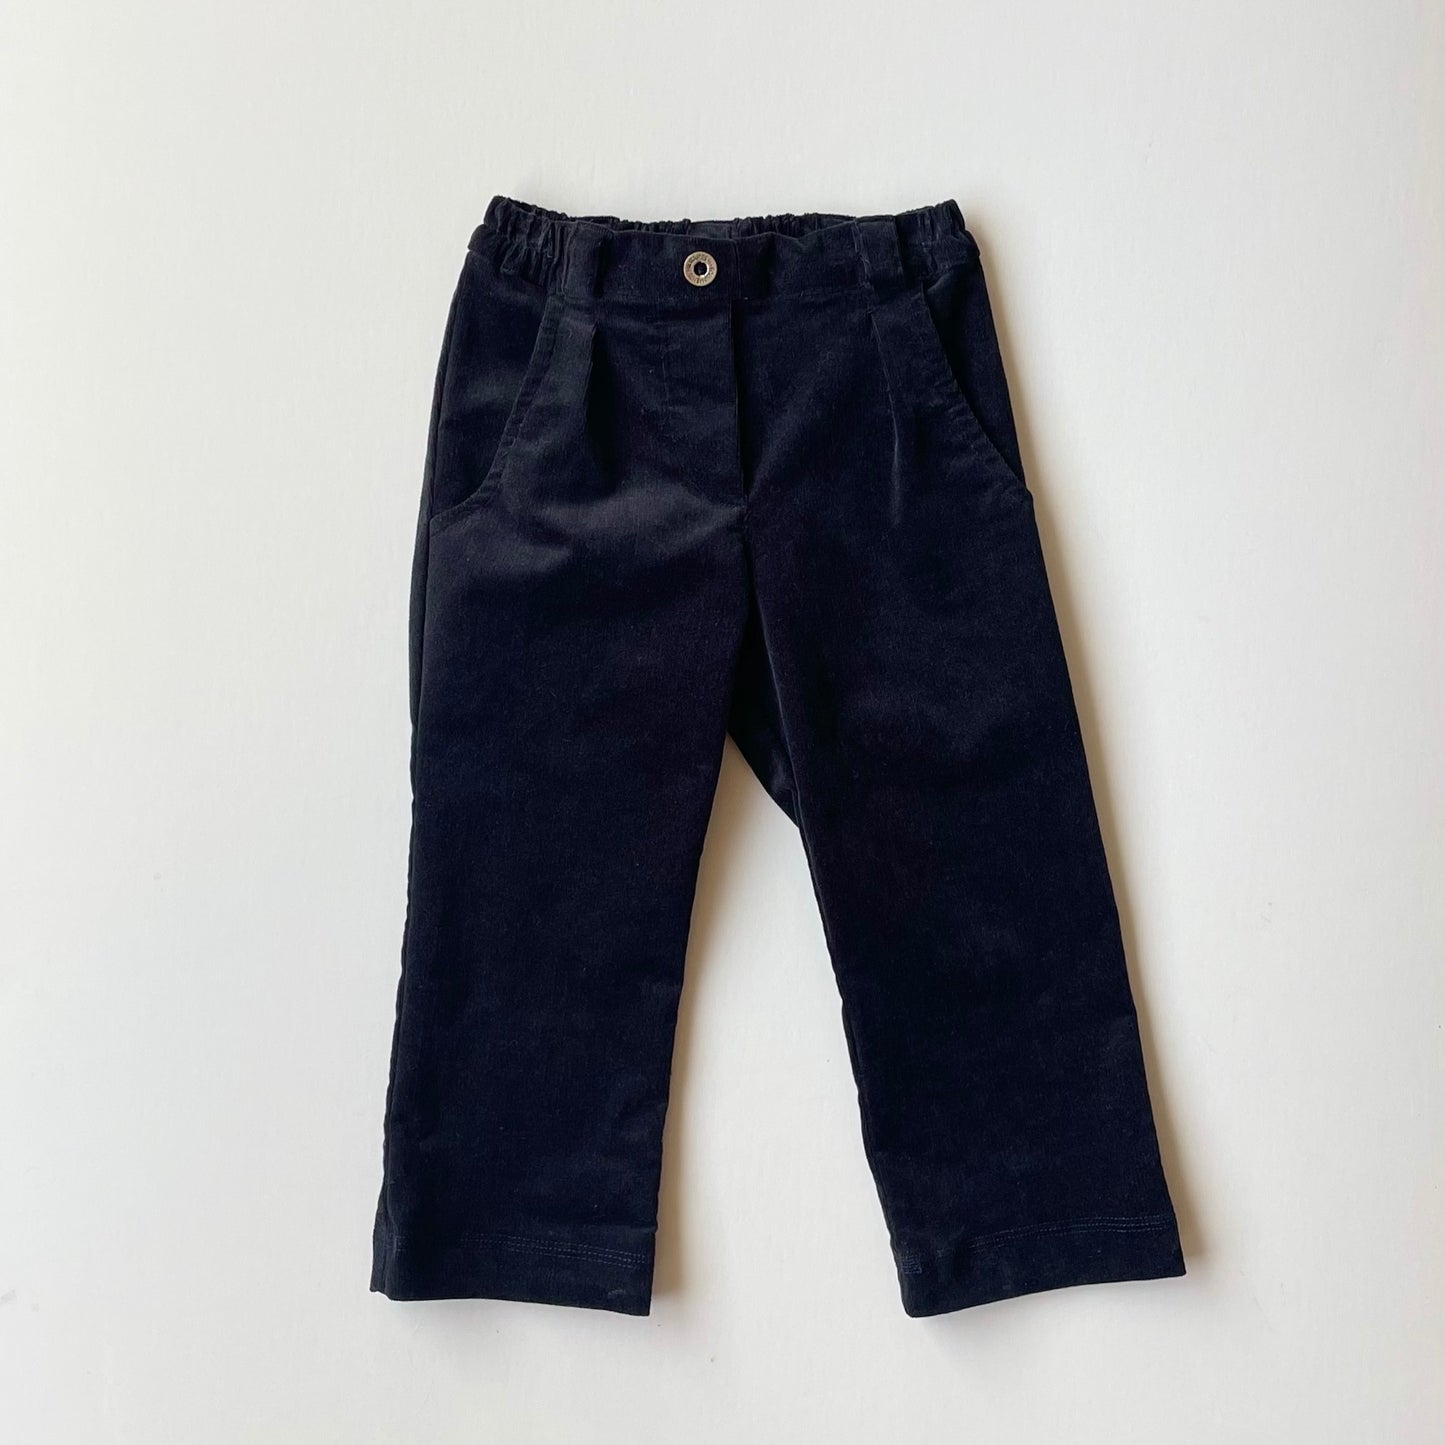 Jordan Trouser, in Black Smooth Rail Corduroy Cotton (Made to Order)